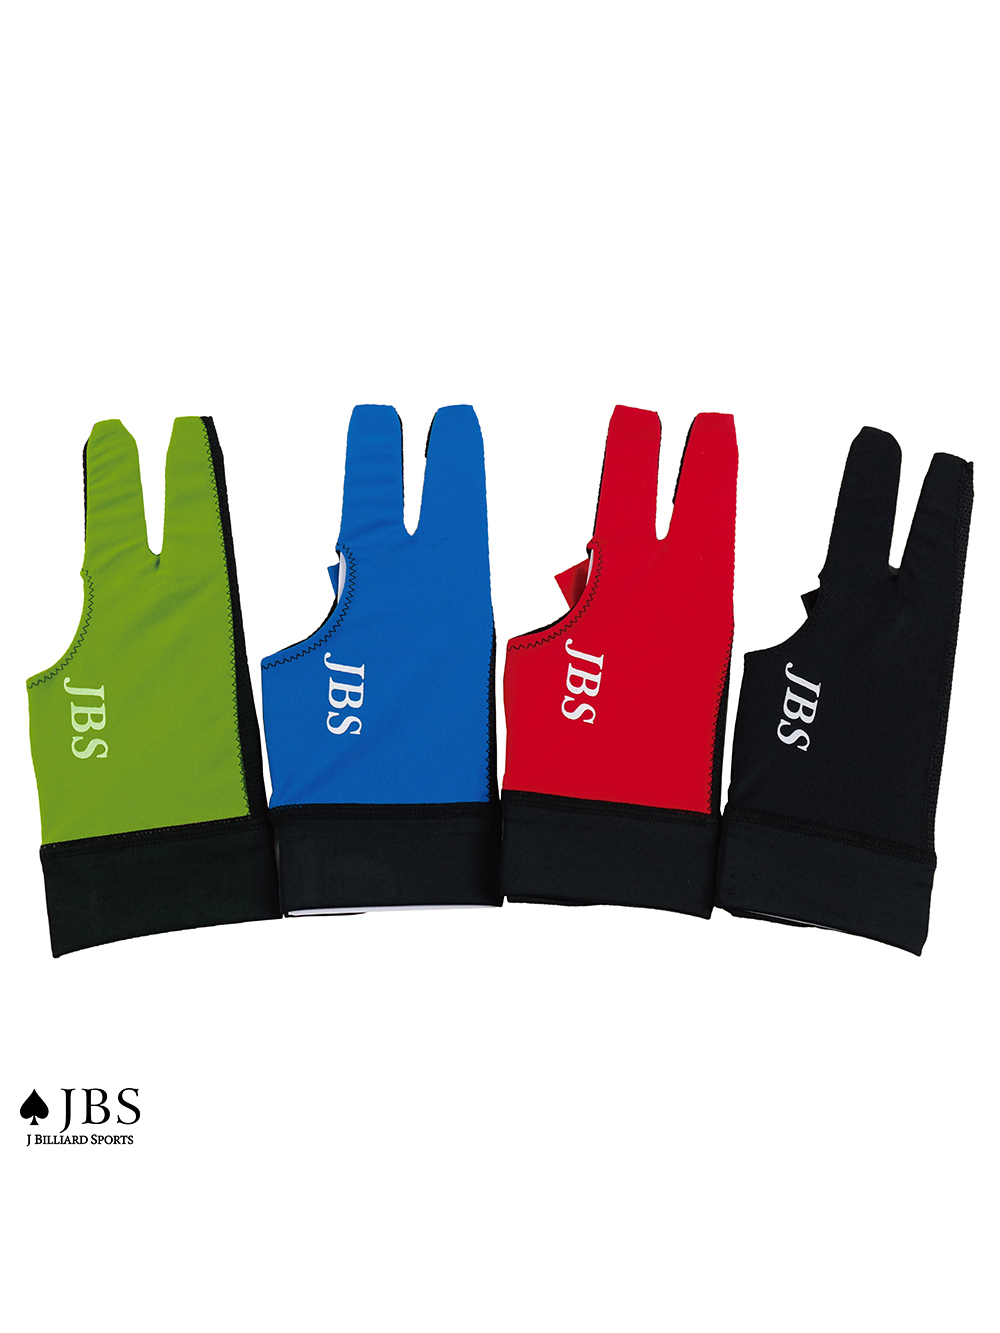 ♠JBS Player Glove